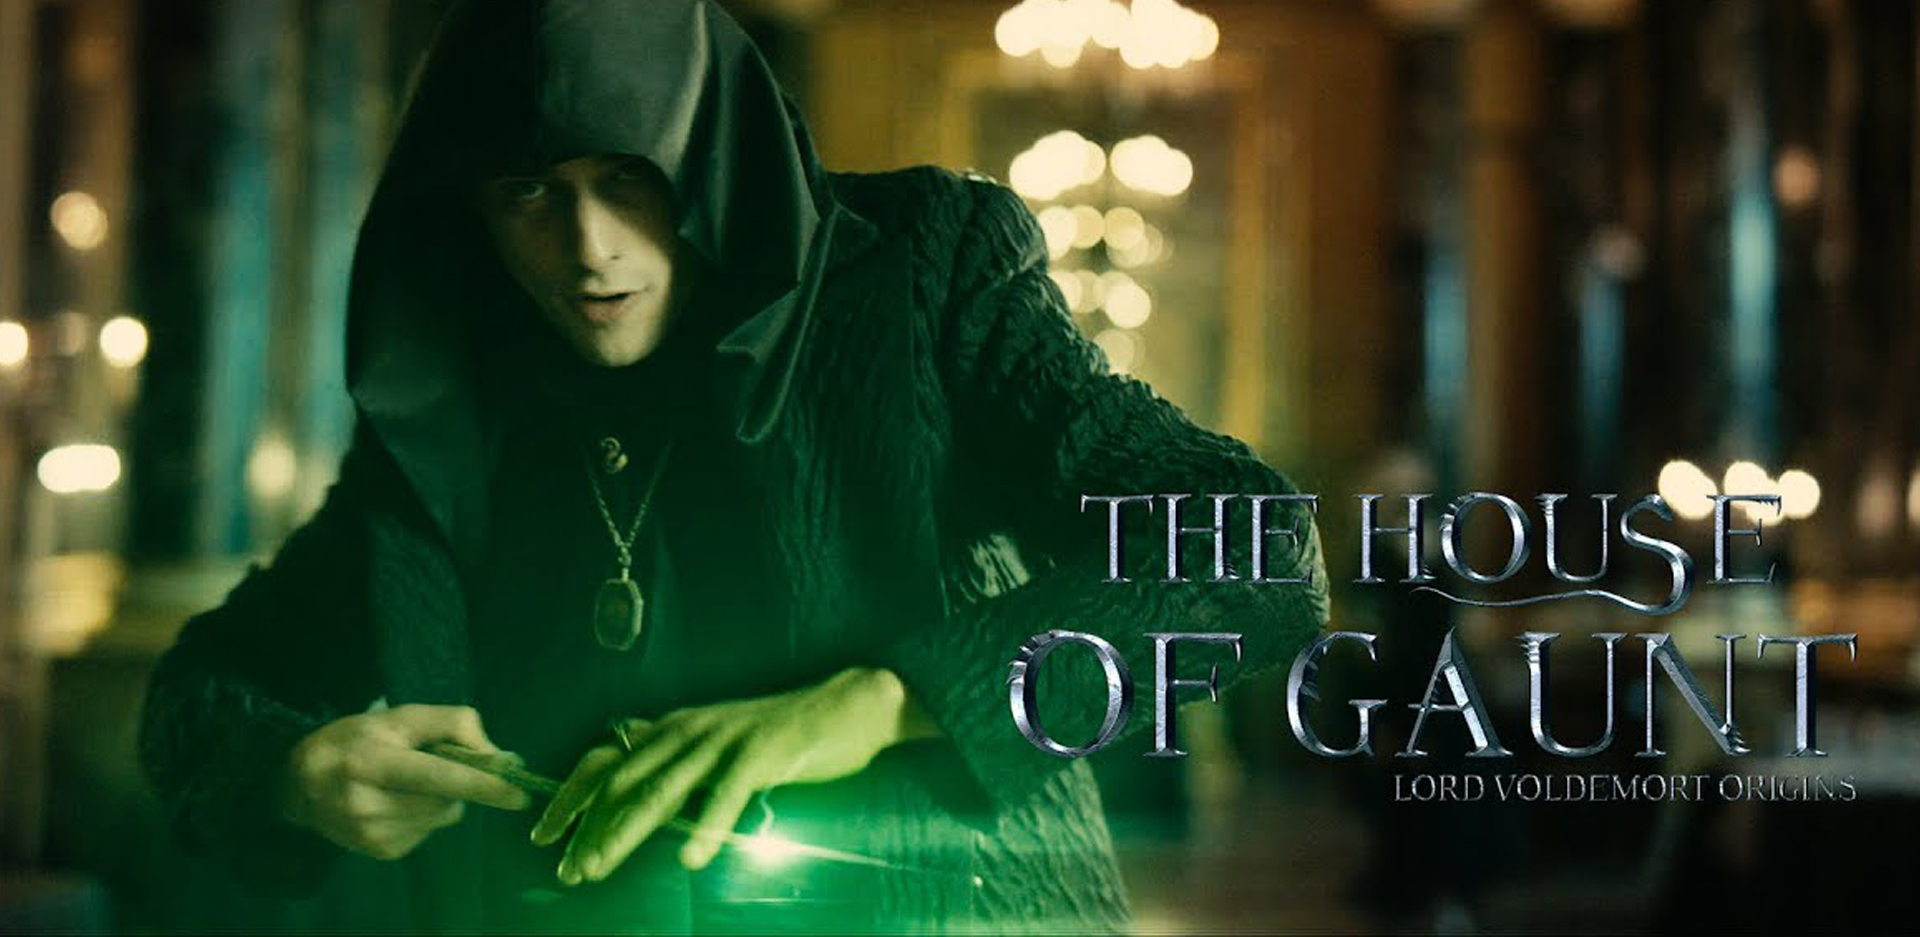 Gia Tộc Gaunt: Hồi Ký Của Chúa Tể Voldemort-The House Of Gaunt: Lord Voldemort Origins